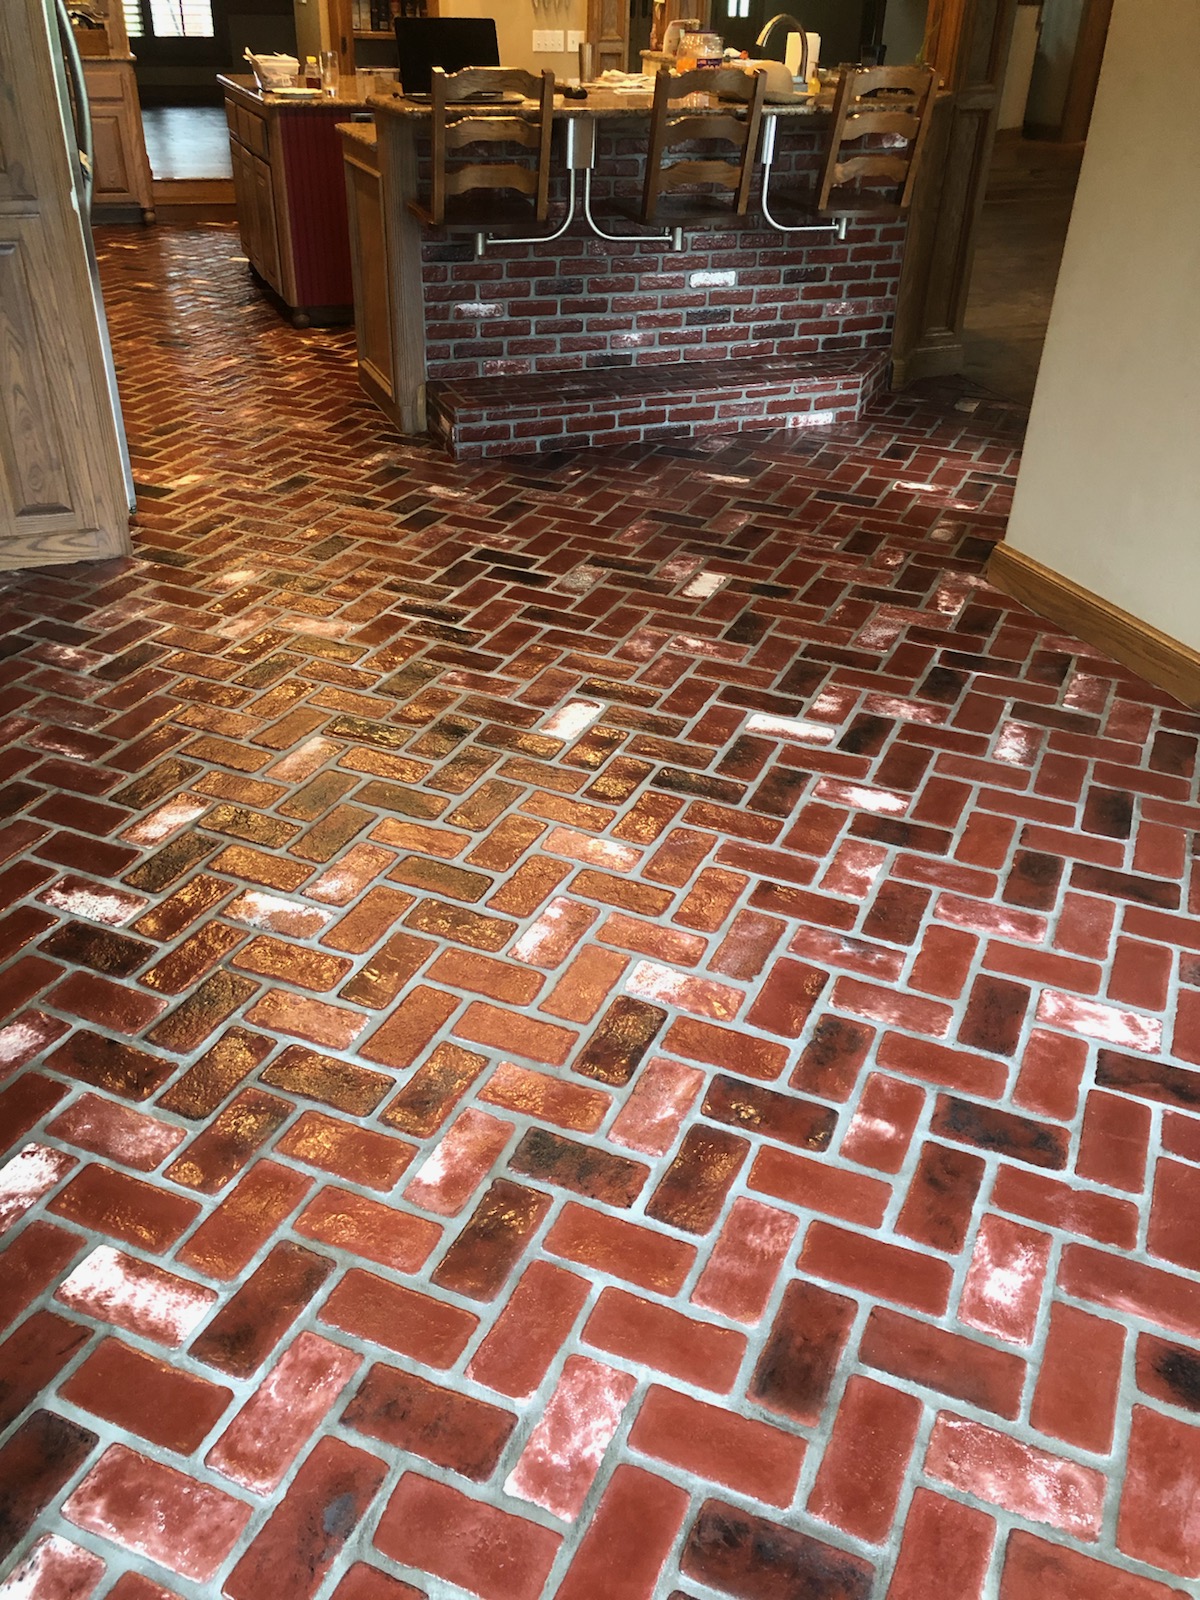 Patriot Pavers thin brick veneer. Brick floor in a kitchen. Sadie's Vineyard brick color.  Alpha Brick Antique Burgundy brick color.